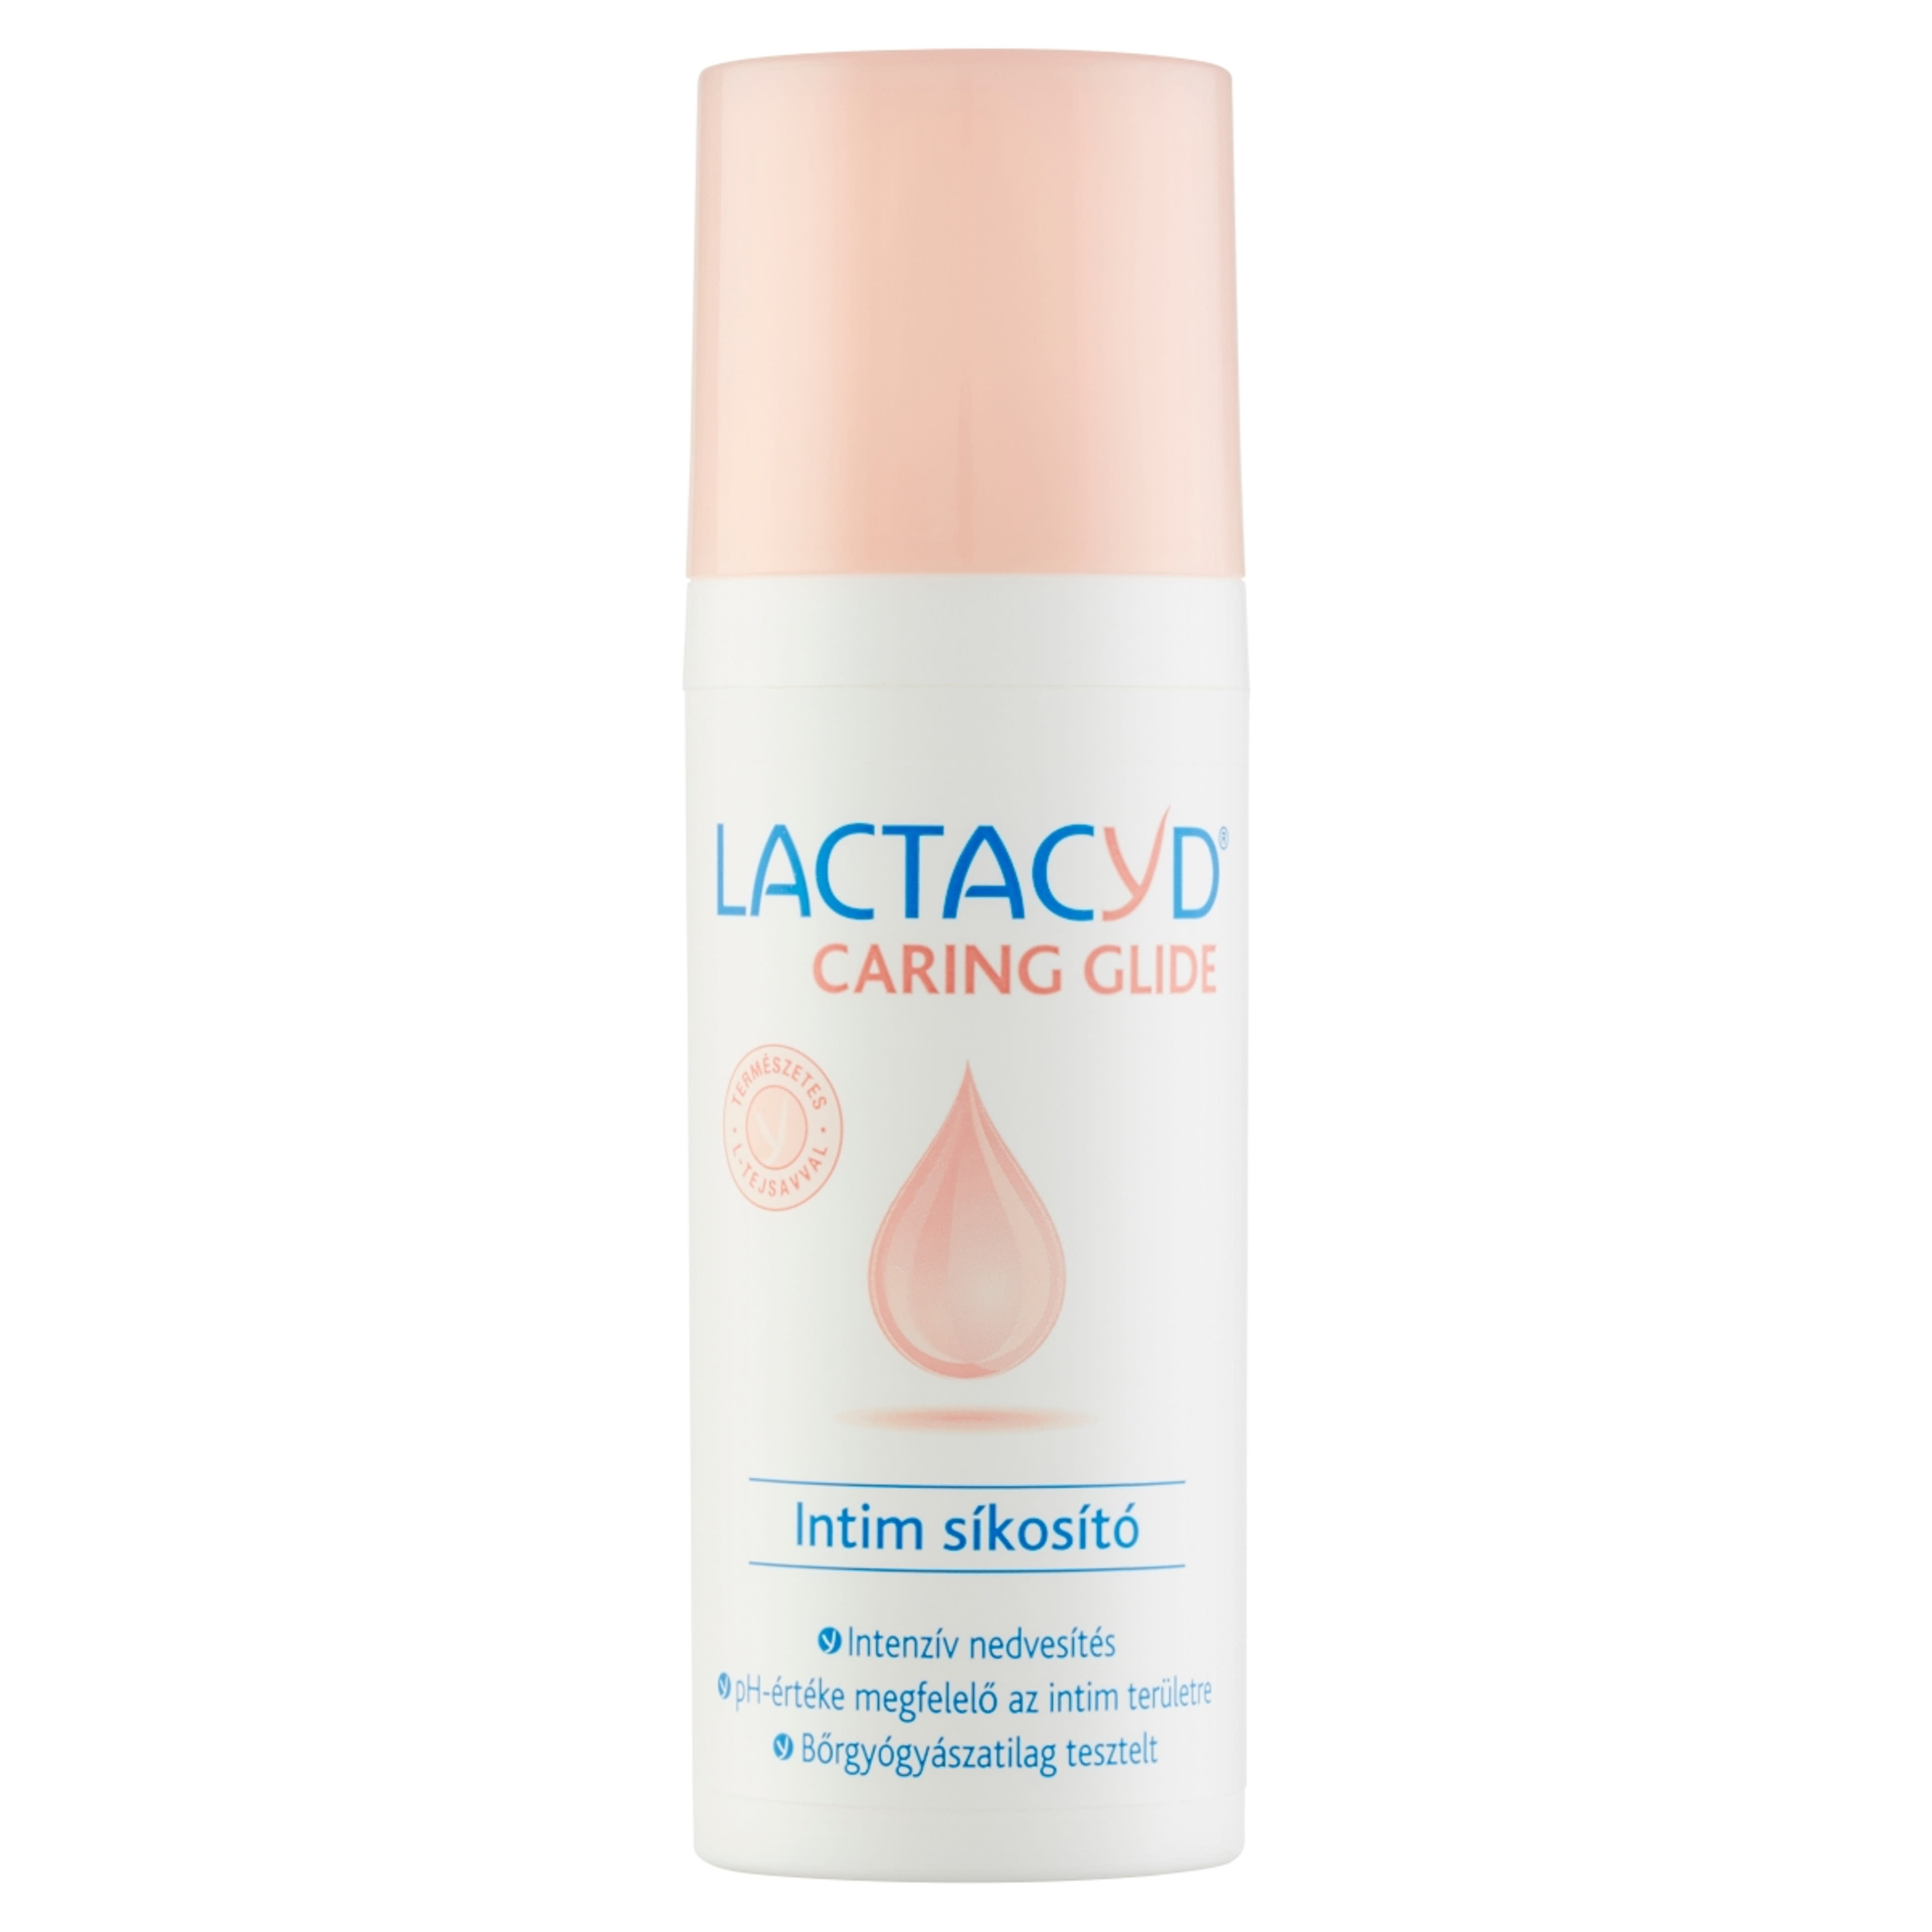 Lactacyd caring glide intim síkosító - 50 ml